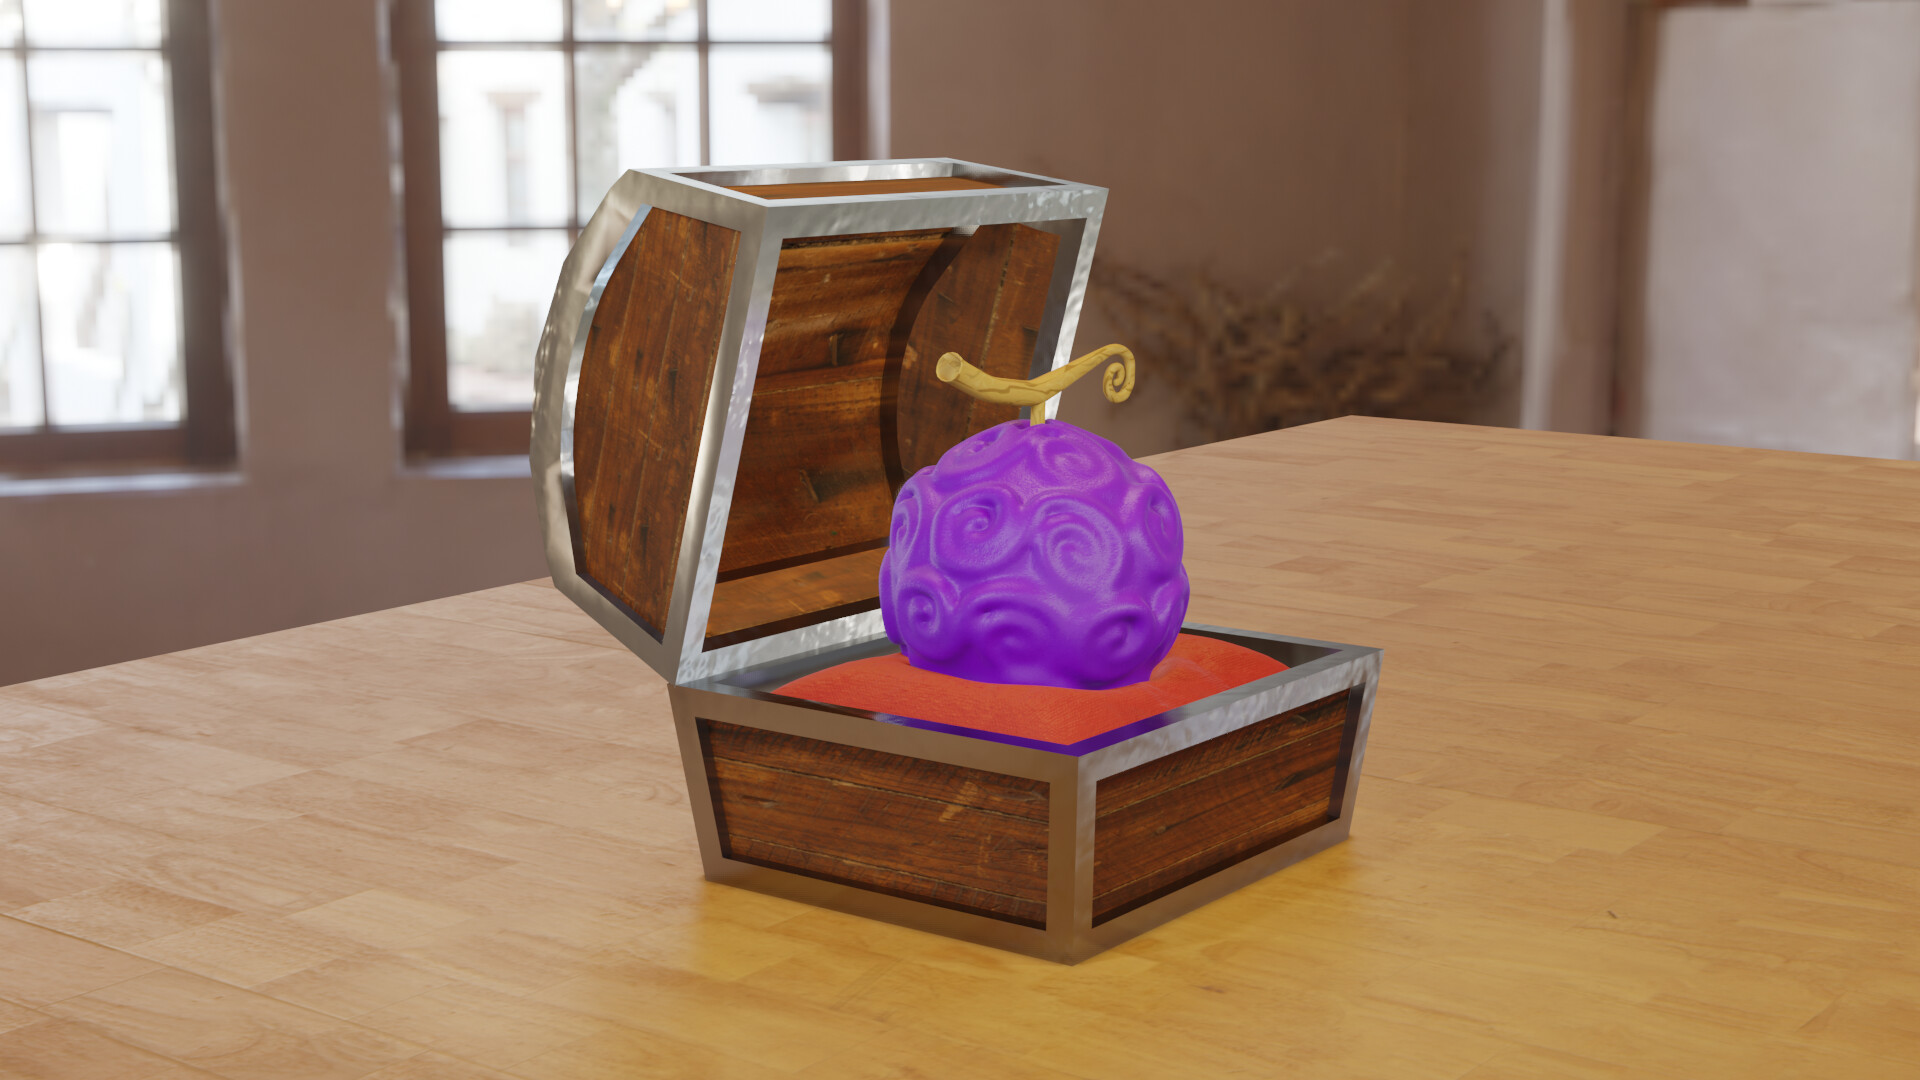 NIKA Fruit  Gomu Gomu No Mi (NOVICE MADE) - 3D model by AnshiNoWara  (@anshinowara) [6c4824d]